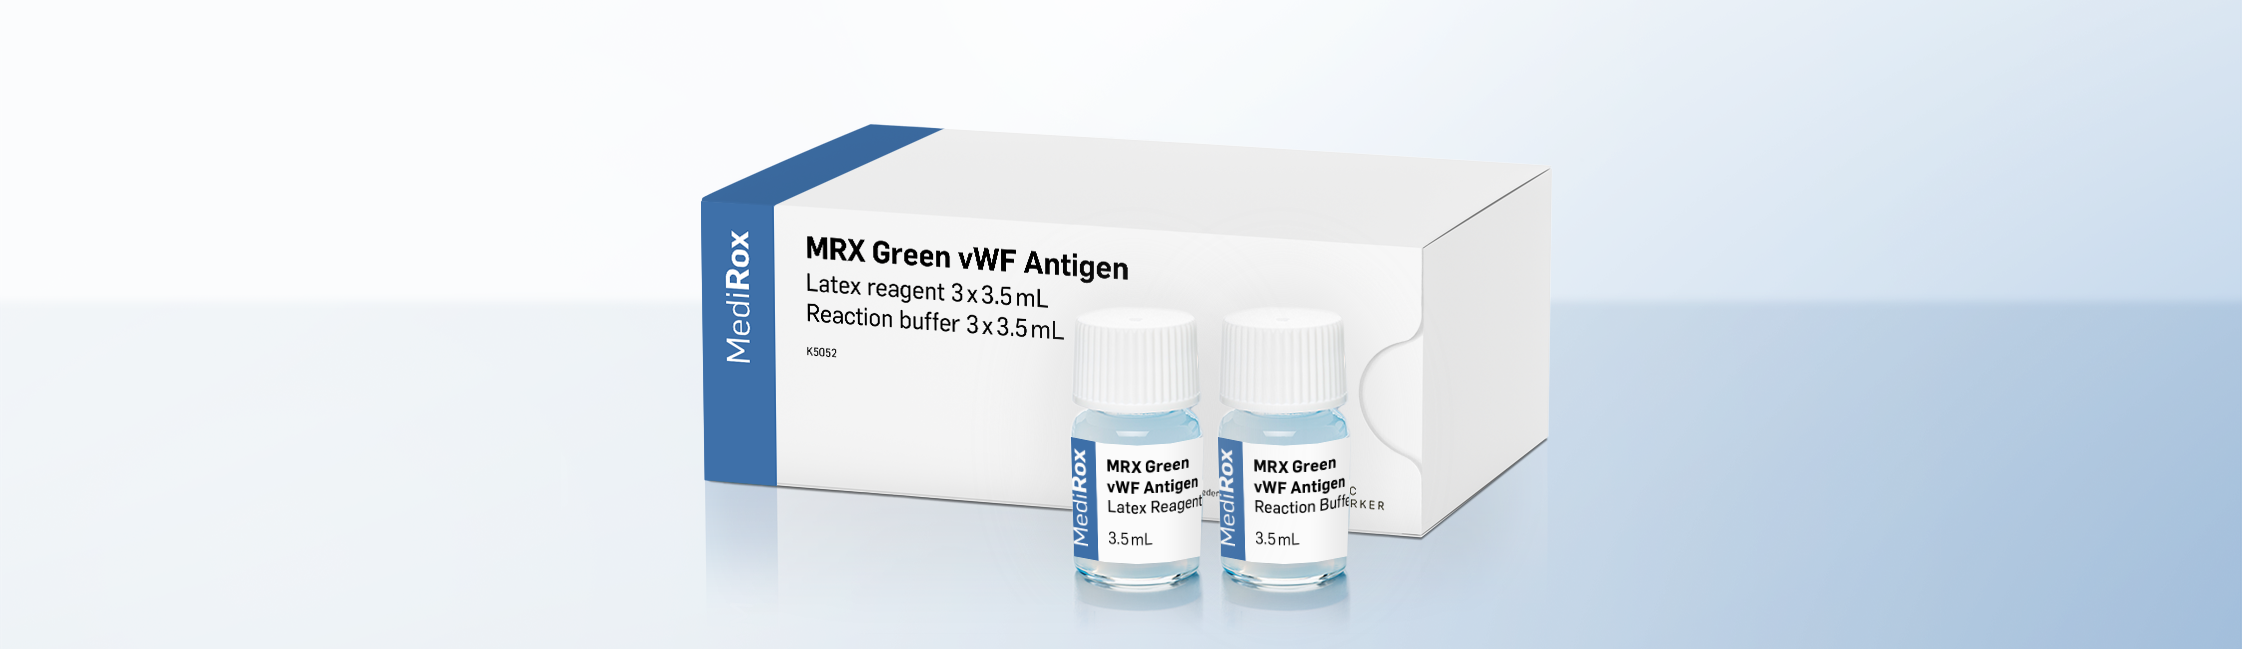 MRX Green vWF Antigen